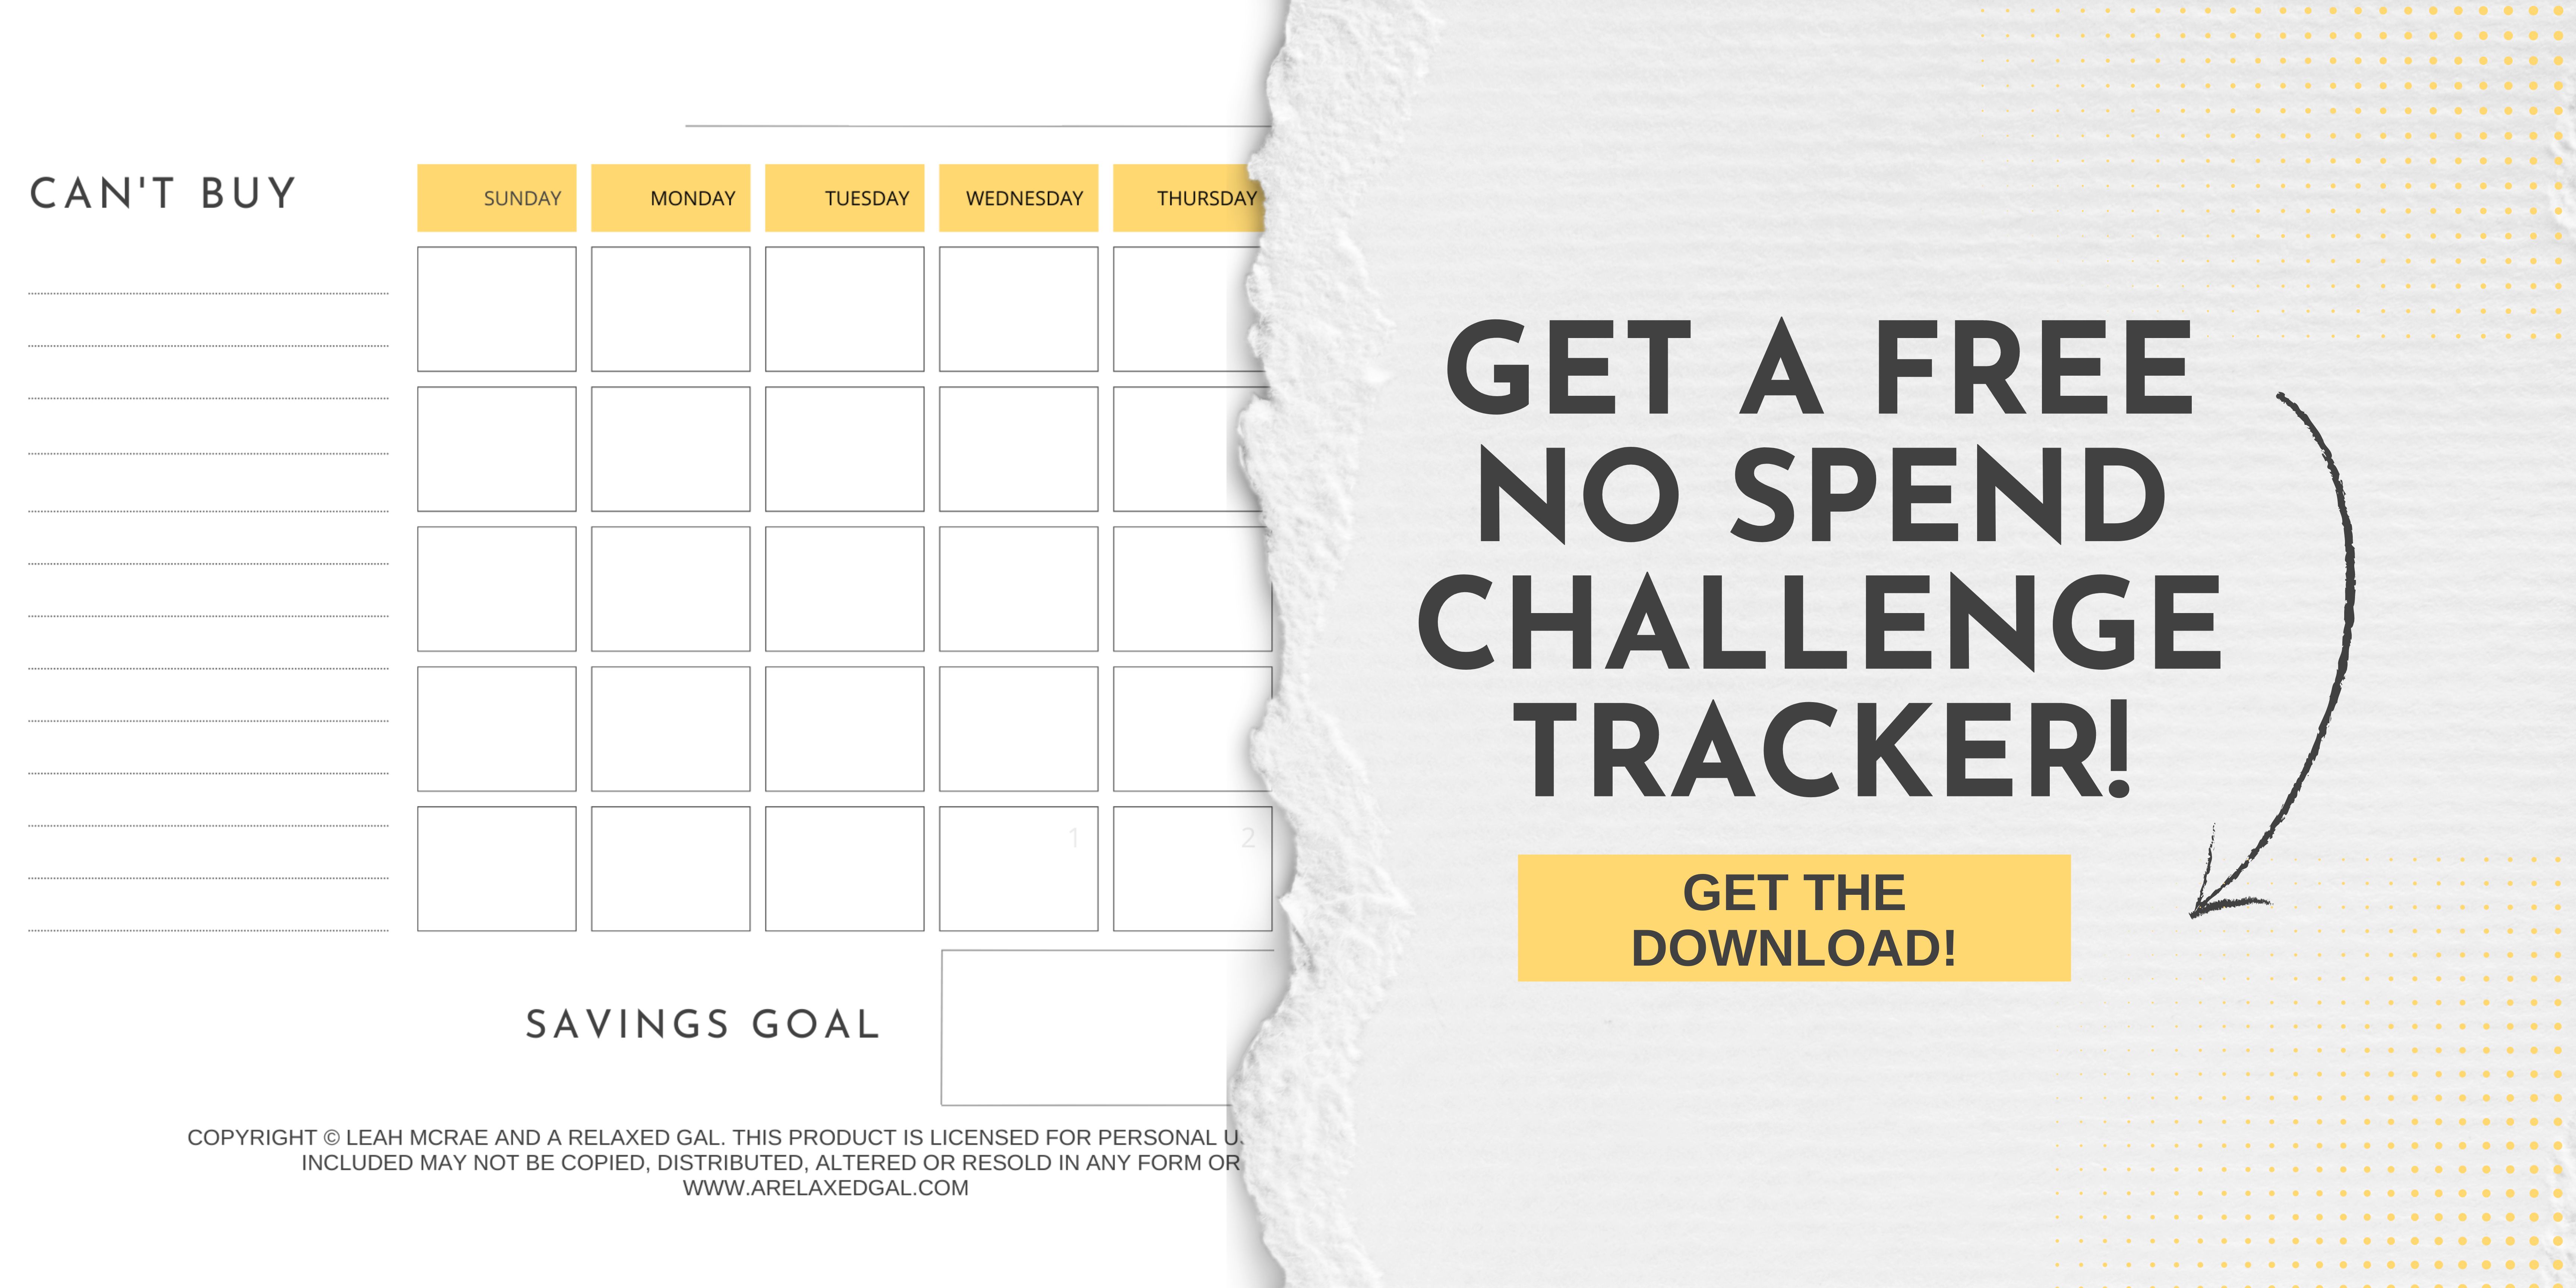 get a free no spend challenge tracker.